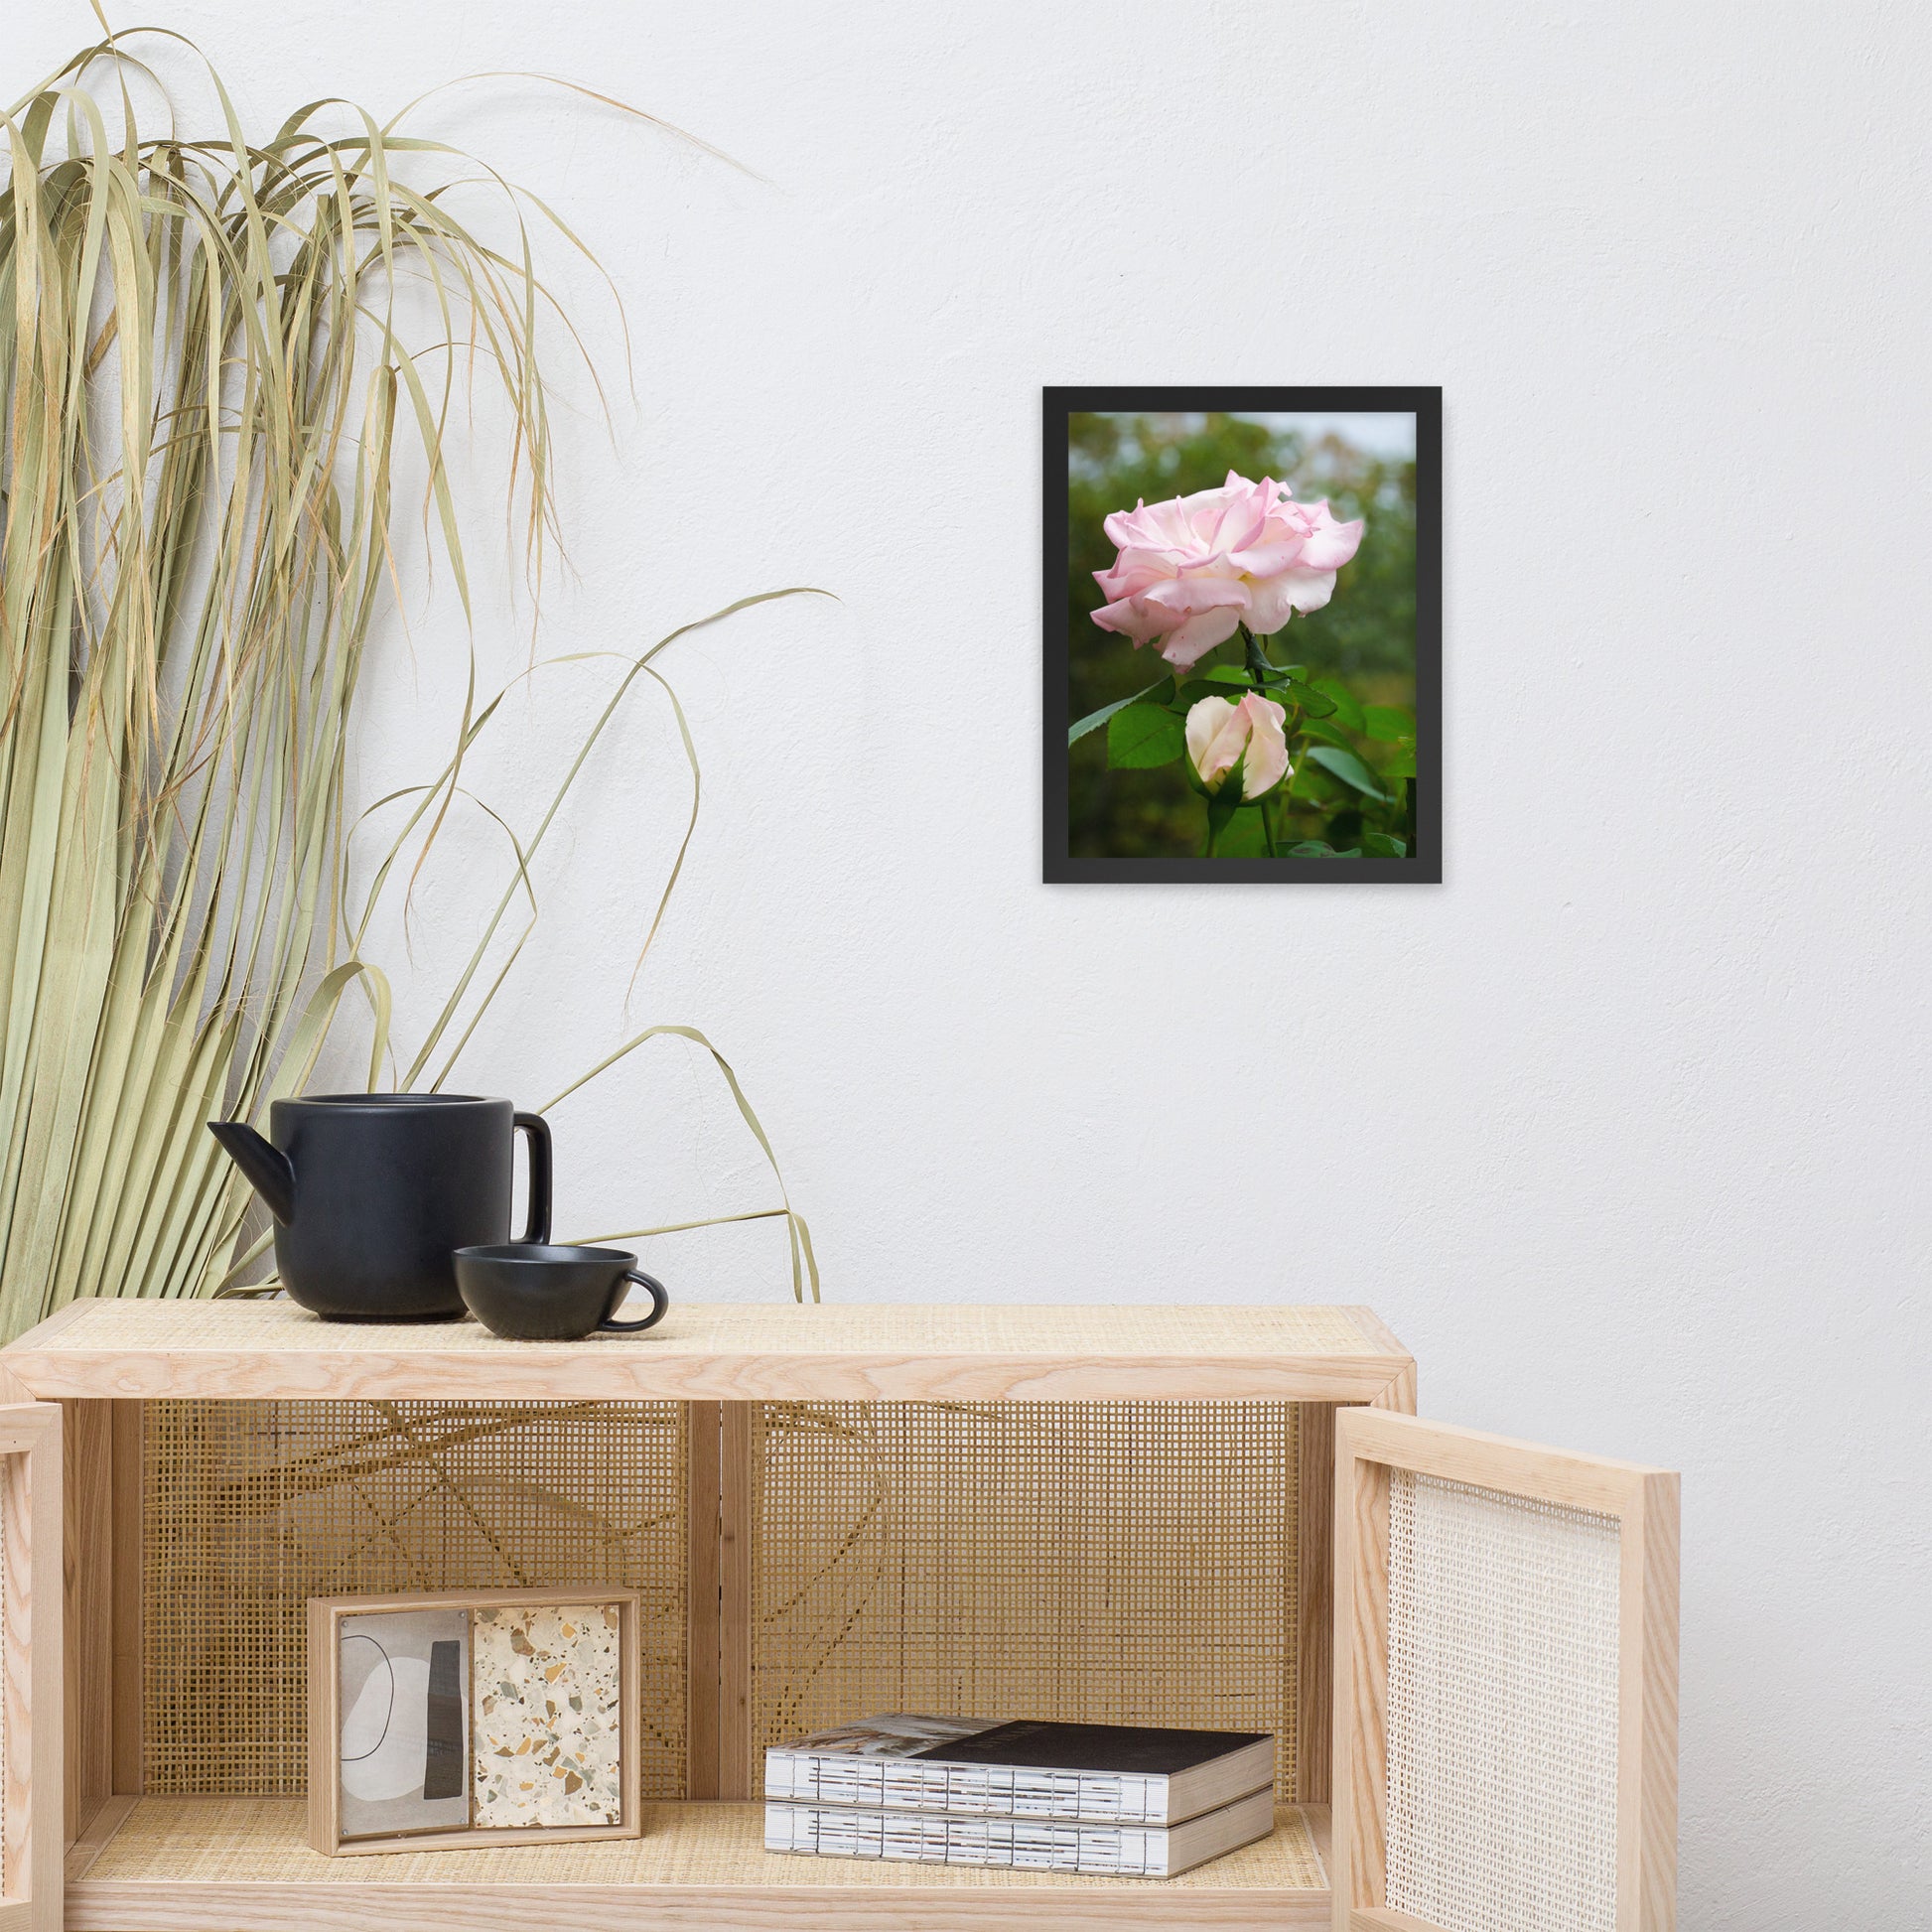 Framed Floral Prints: Admiration - Pink Rose Floral / Botanical / Nature Photo Framed Wall Art Print - Artwork - Wall Decor - Home Decor